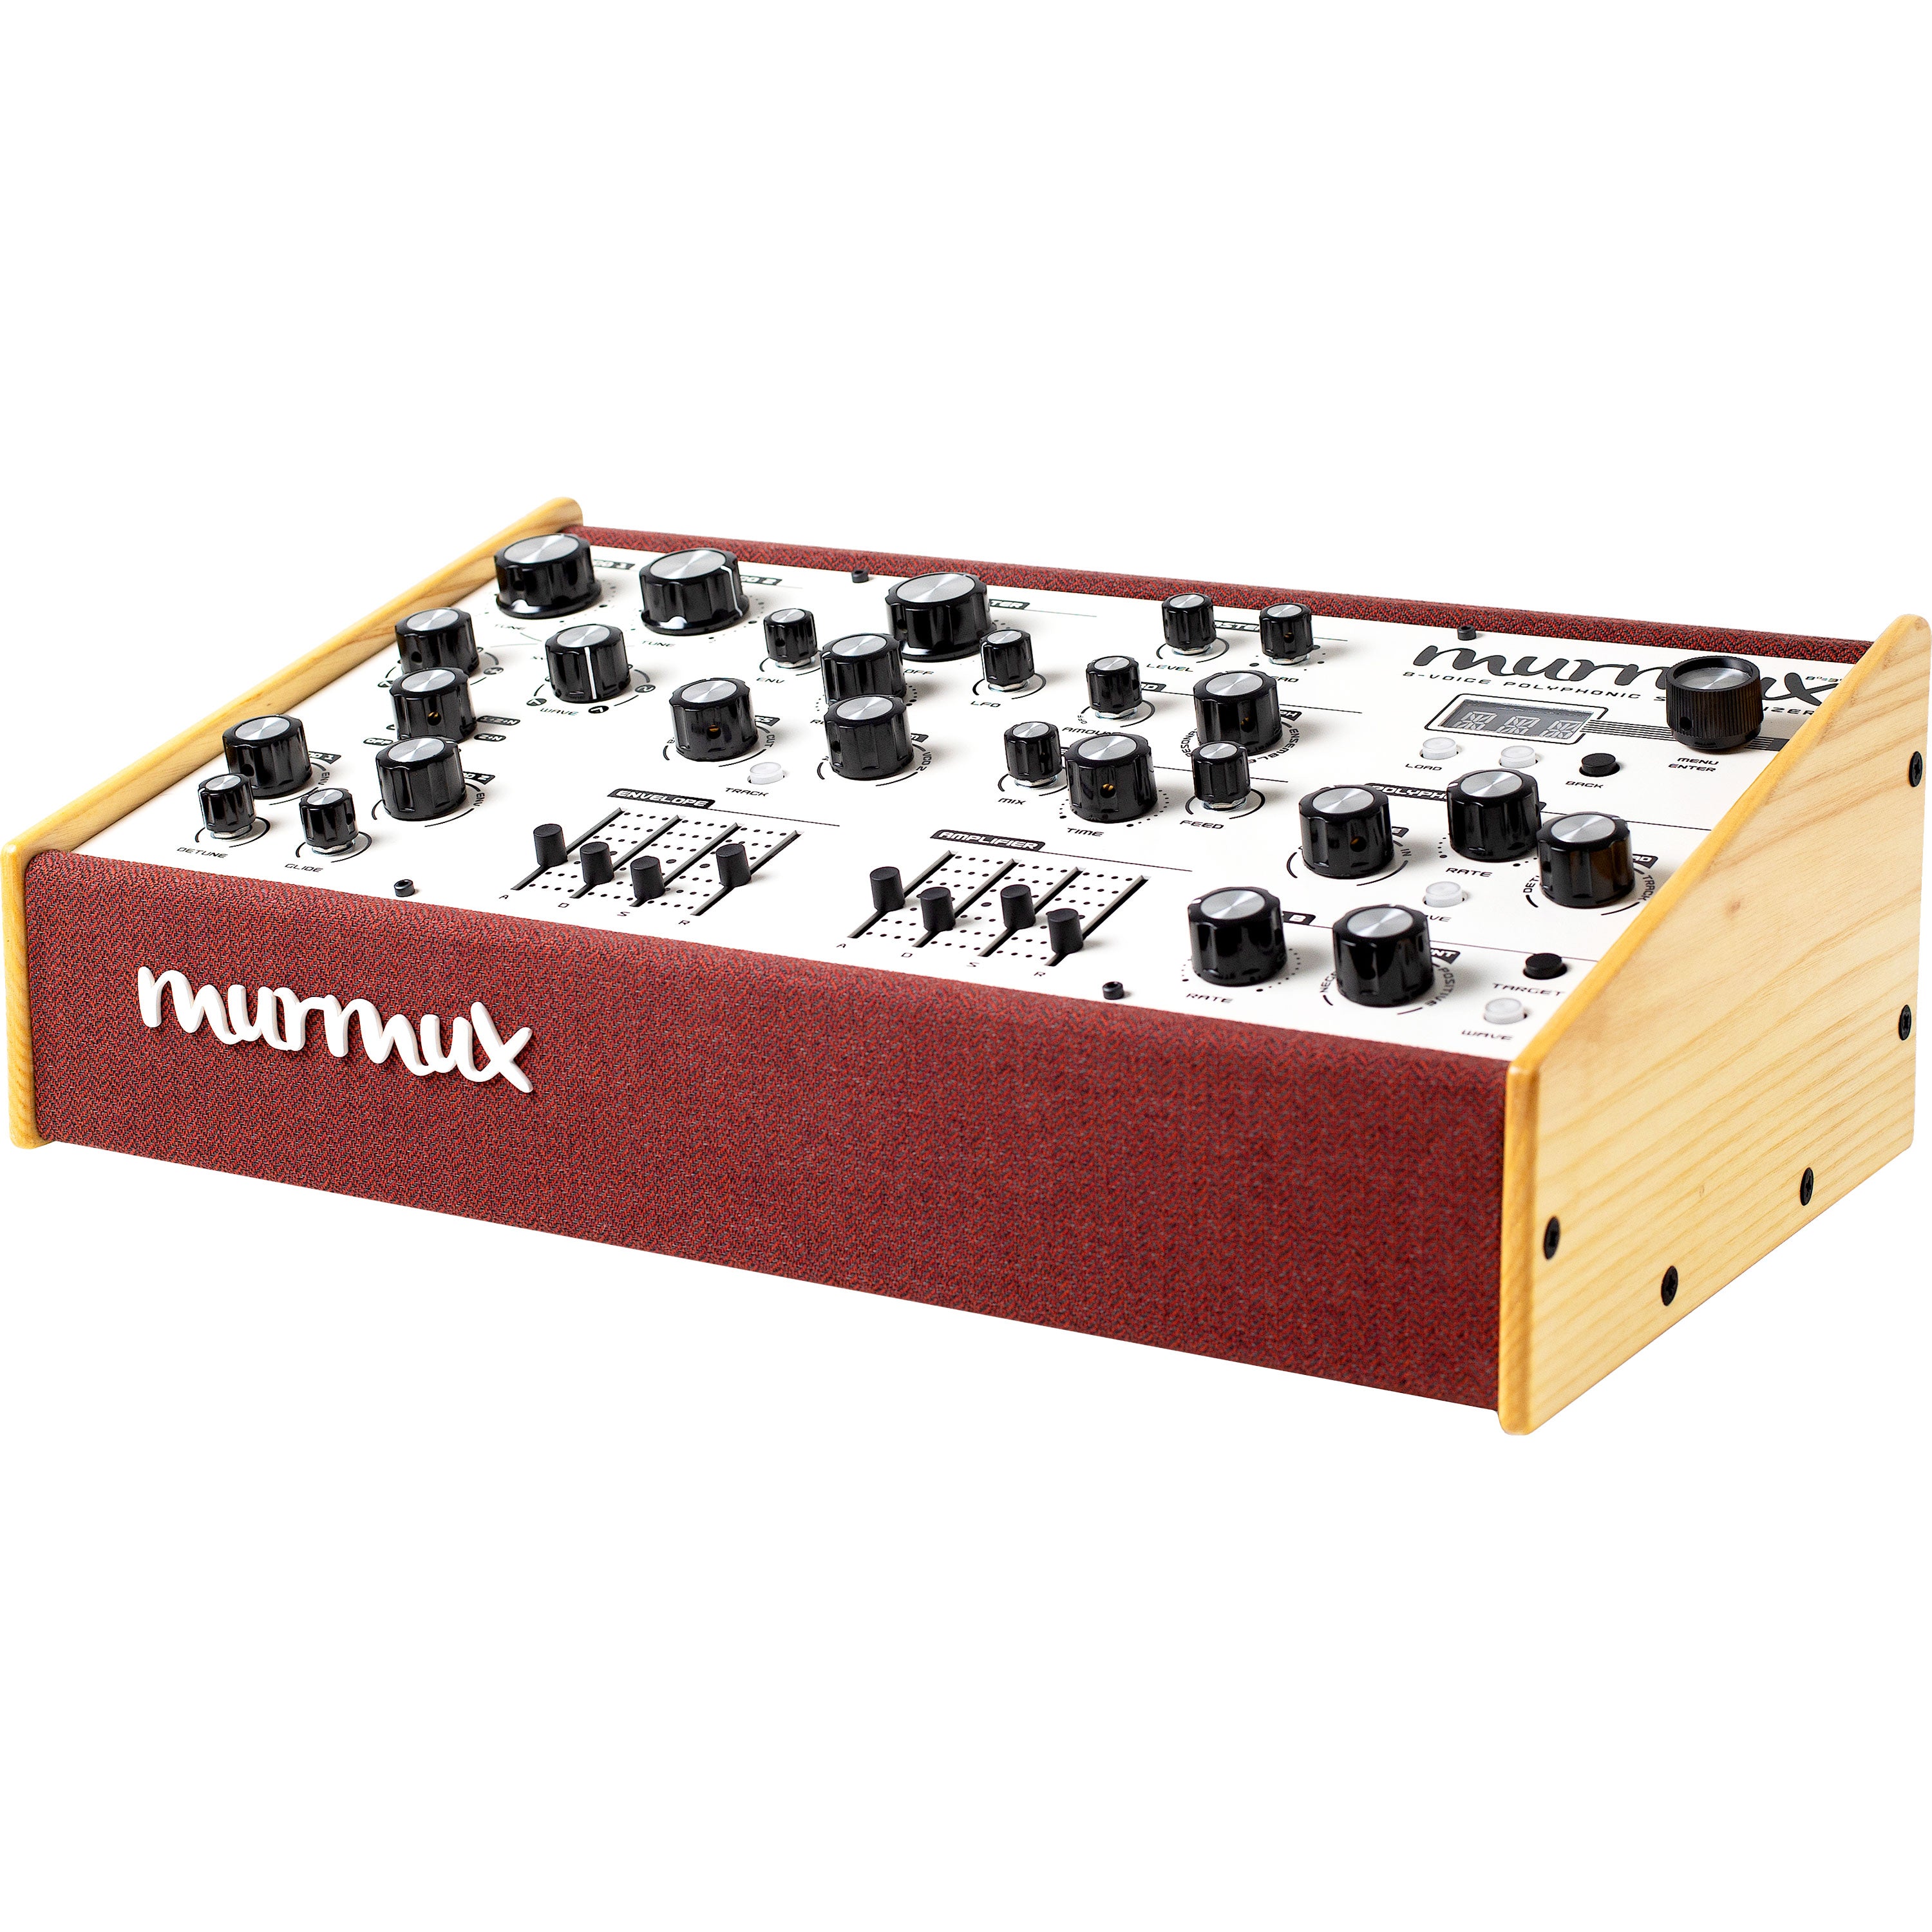 Dreadbox Murmux Adept Edition 8-Voice Polyphonic Synthesizer